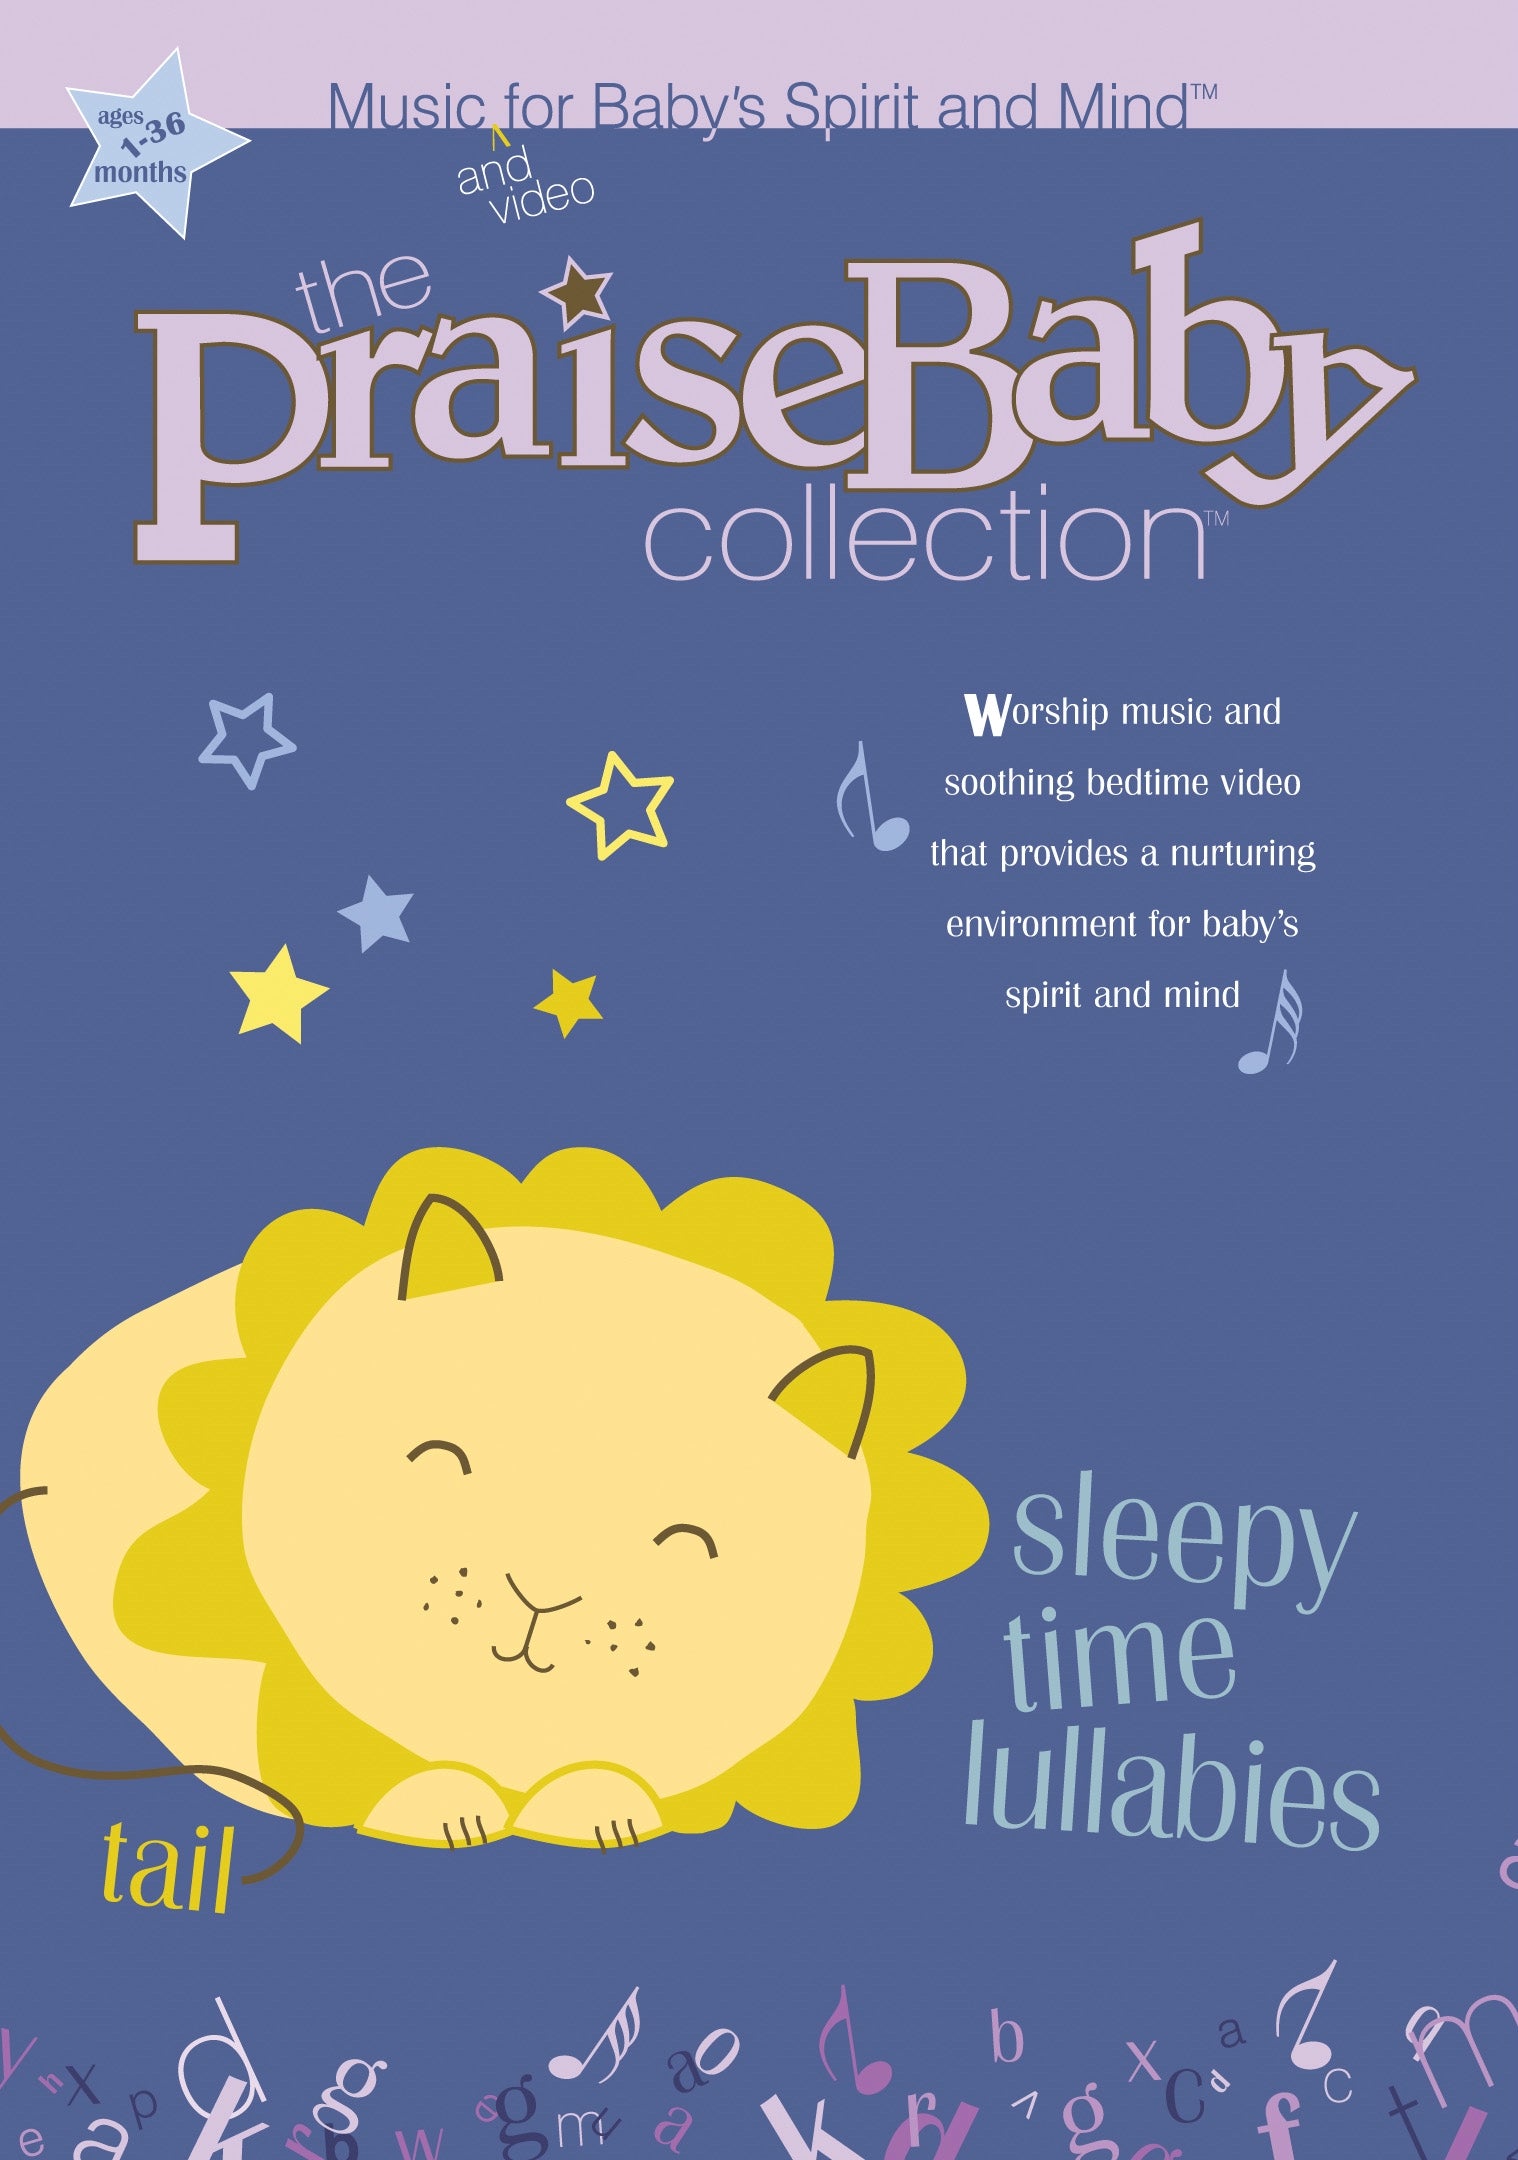 Image of Praise Baby Sleepy Time Lullabies other